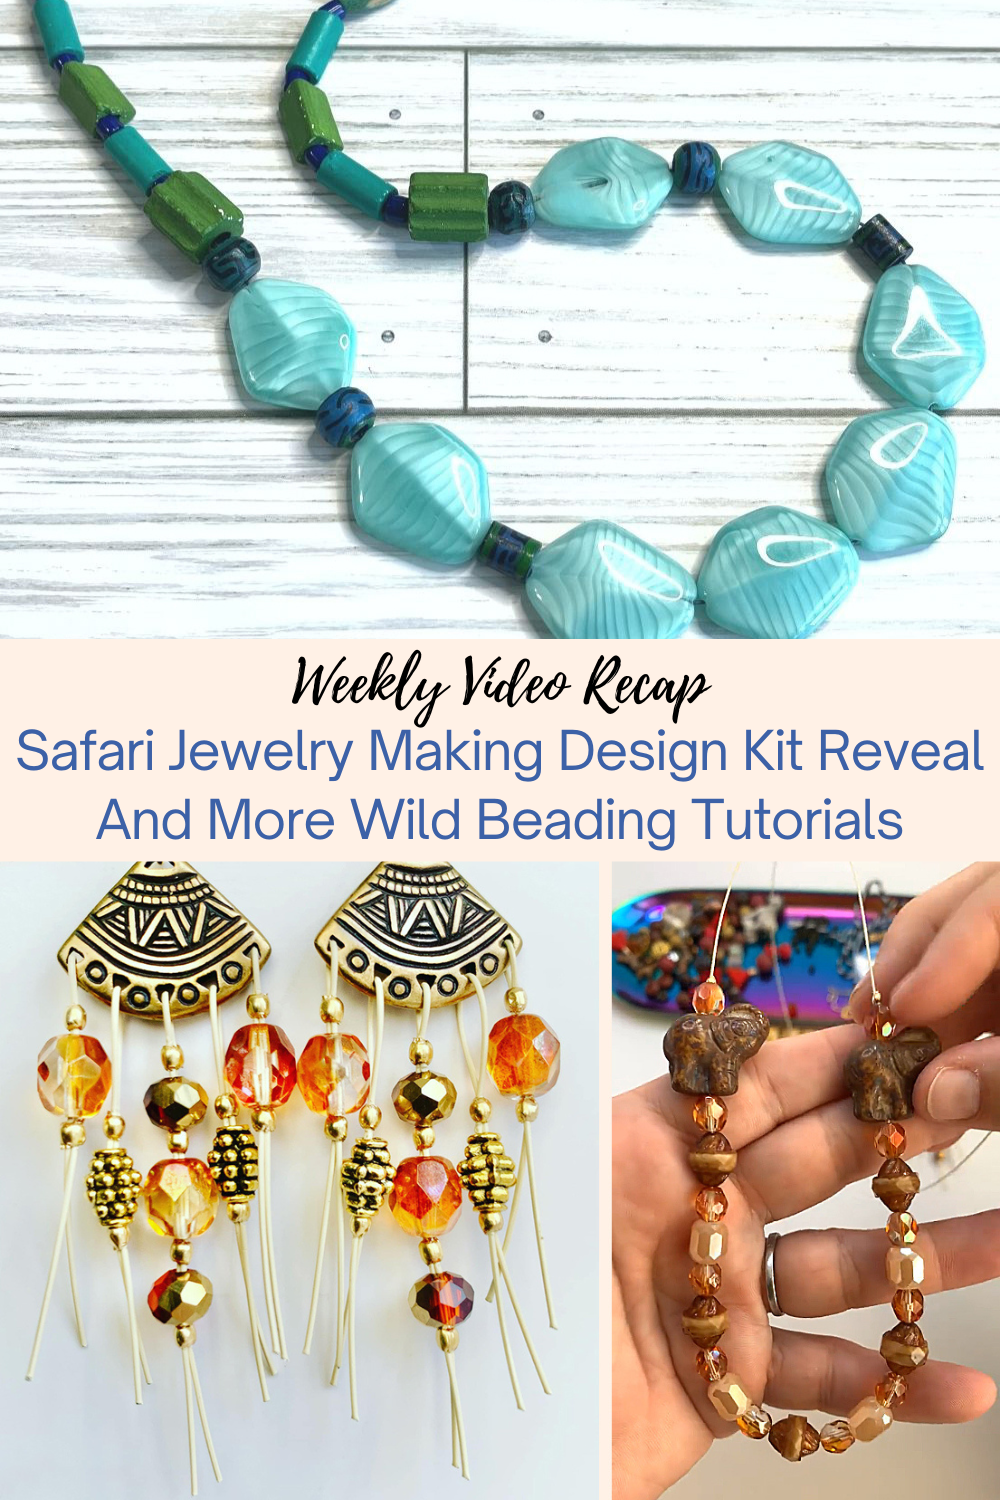 Safari Jewelry Making Design Kit Reveal And More Wild Beading Tutorials Collage